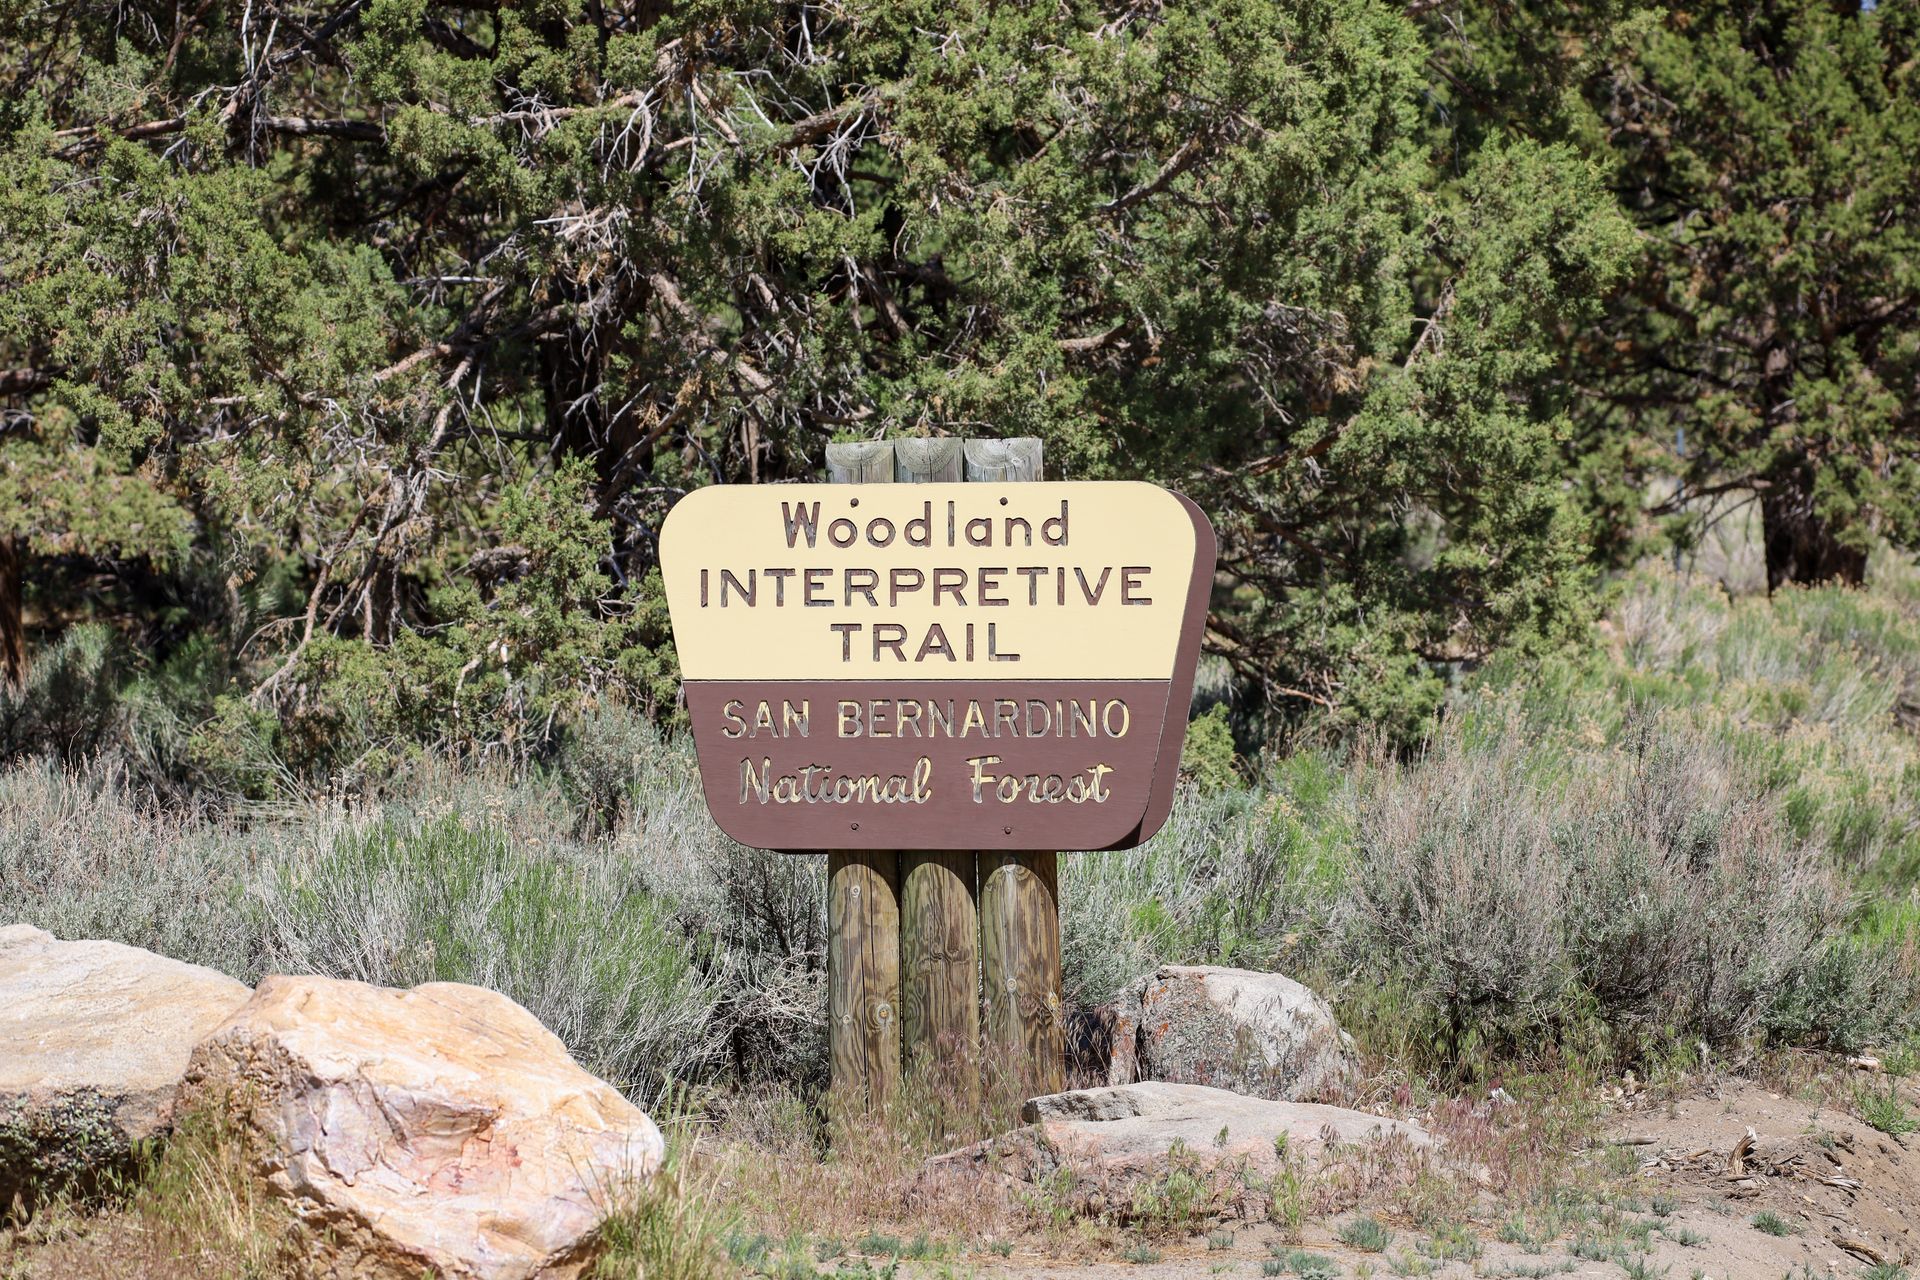 Trailhead sign for the woodland interpretive trail in Big Bear Lake